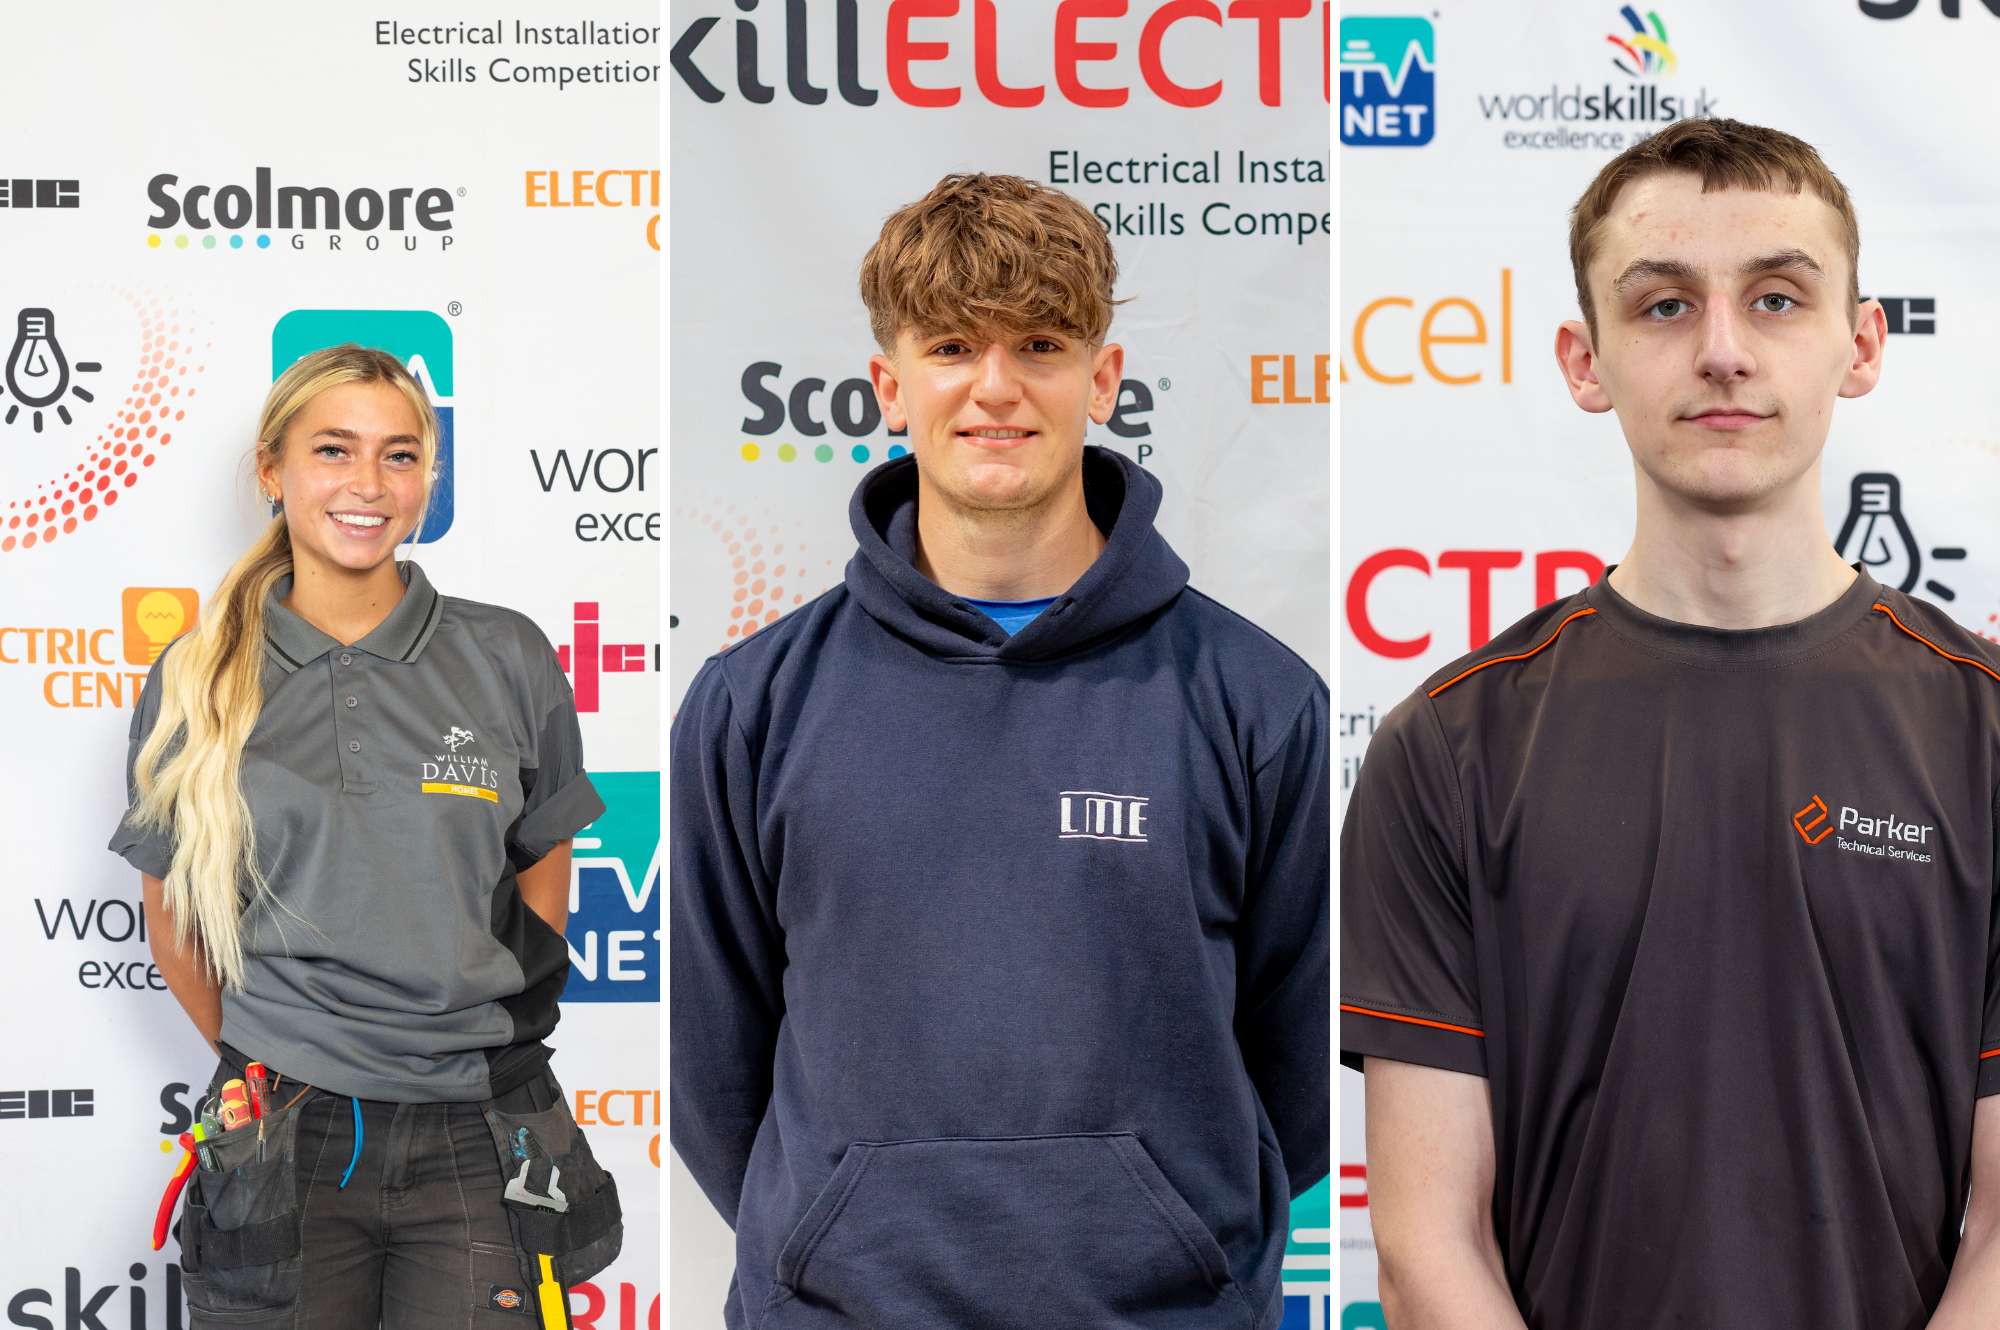 Three JTL apprentices reach the final of World Skills SkillELECTRIC UK